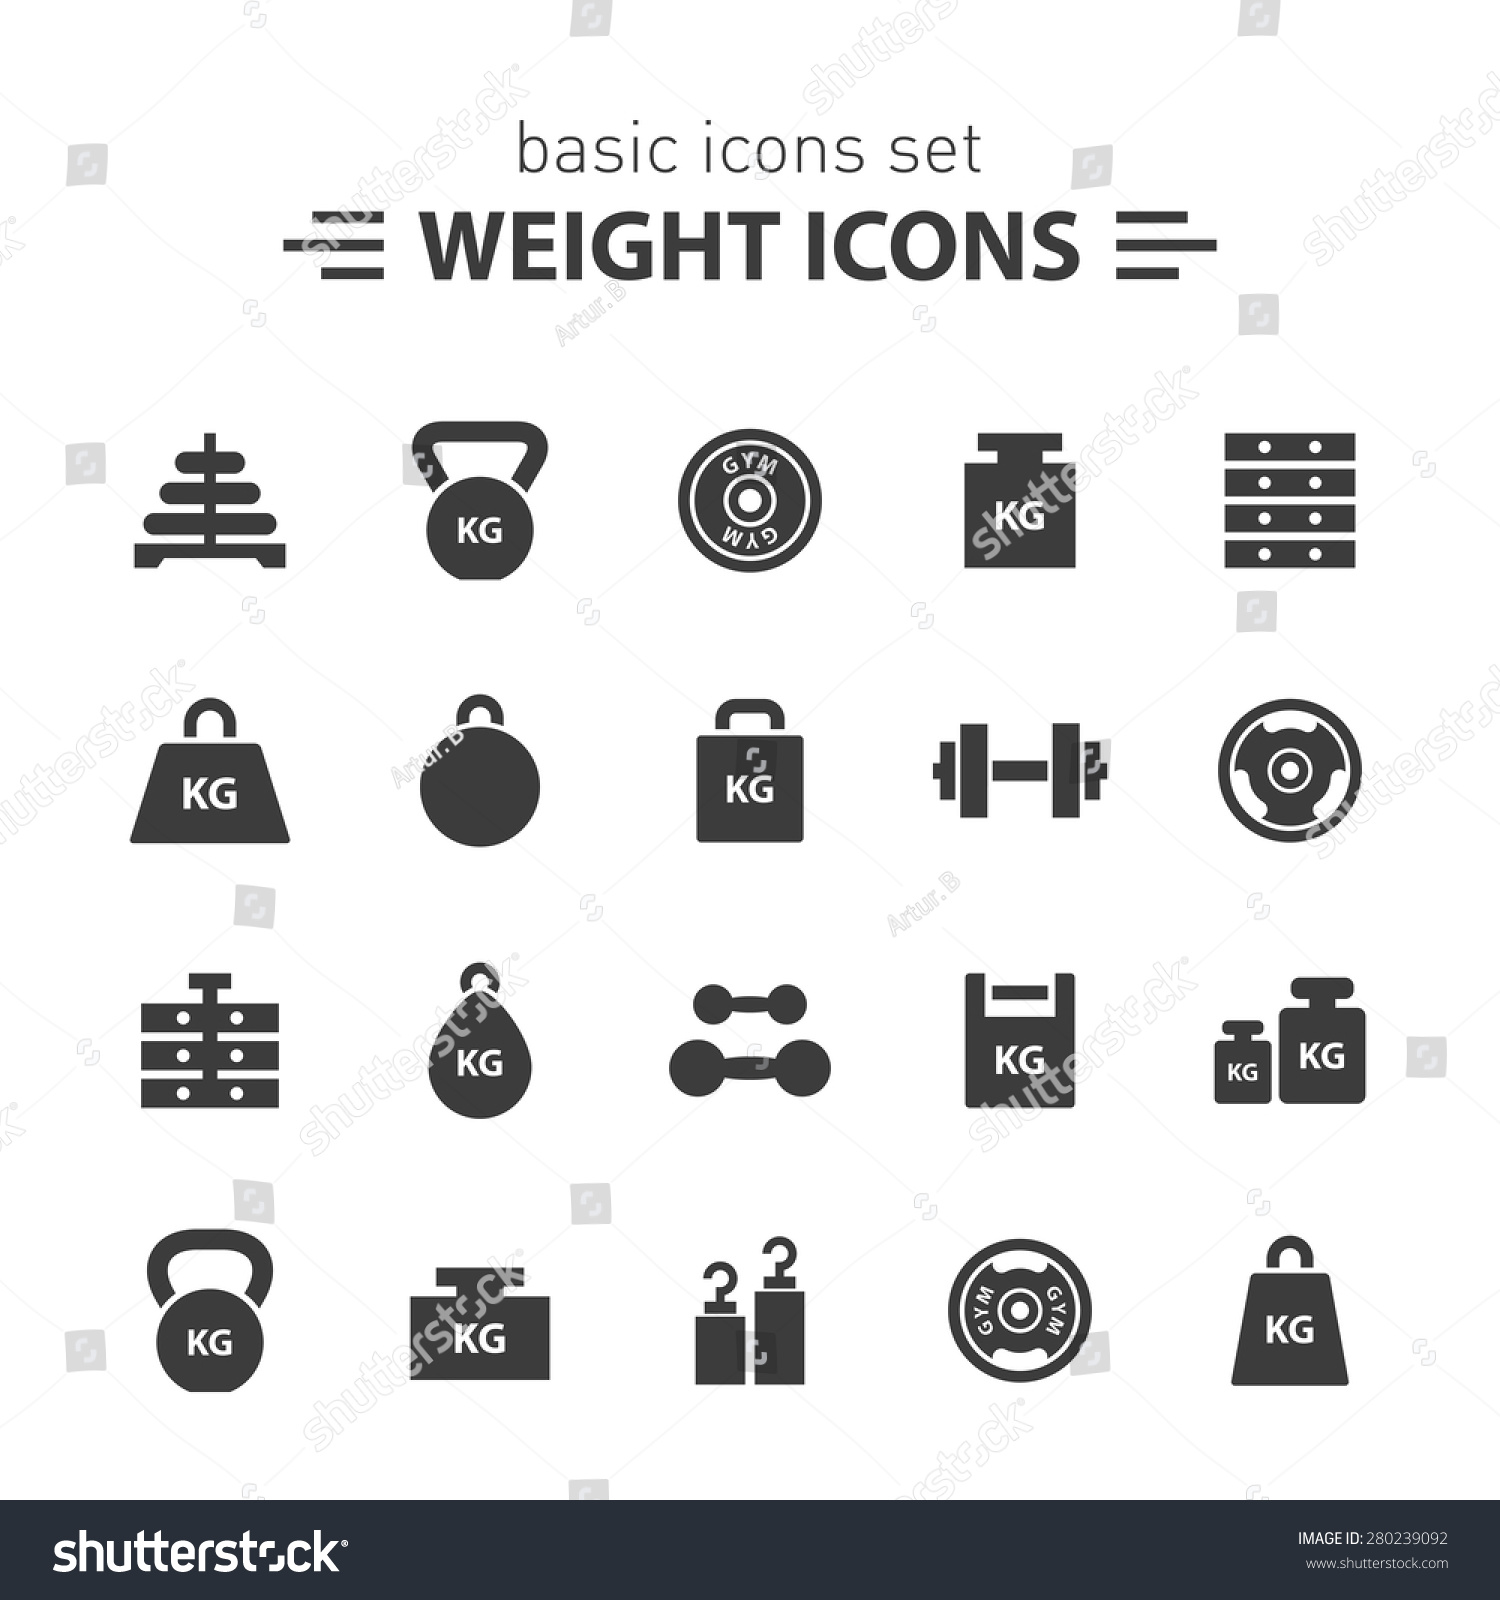 Weight Icons Set. Stock Vector Illustration 280239092 : Shutterstock